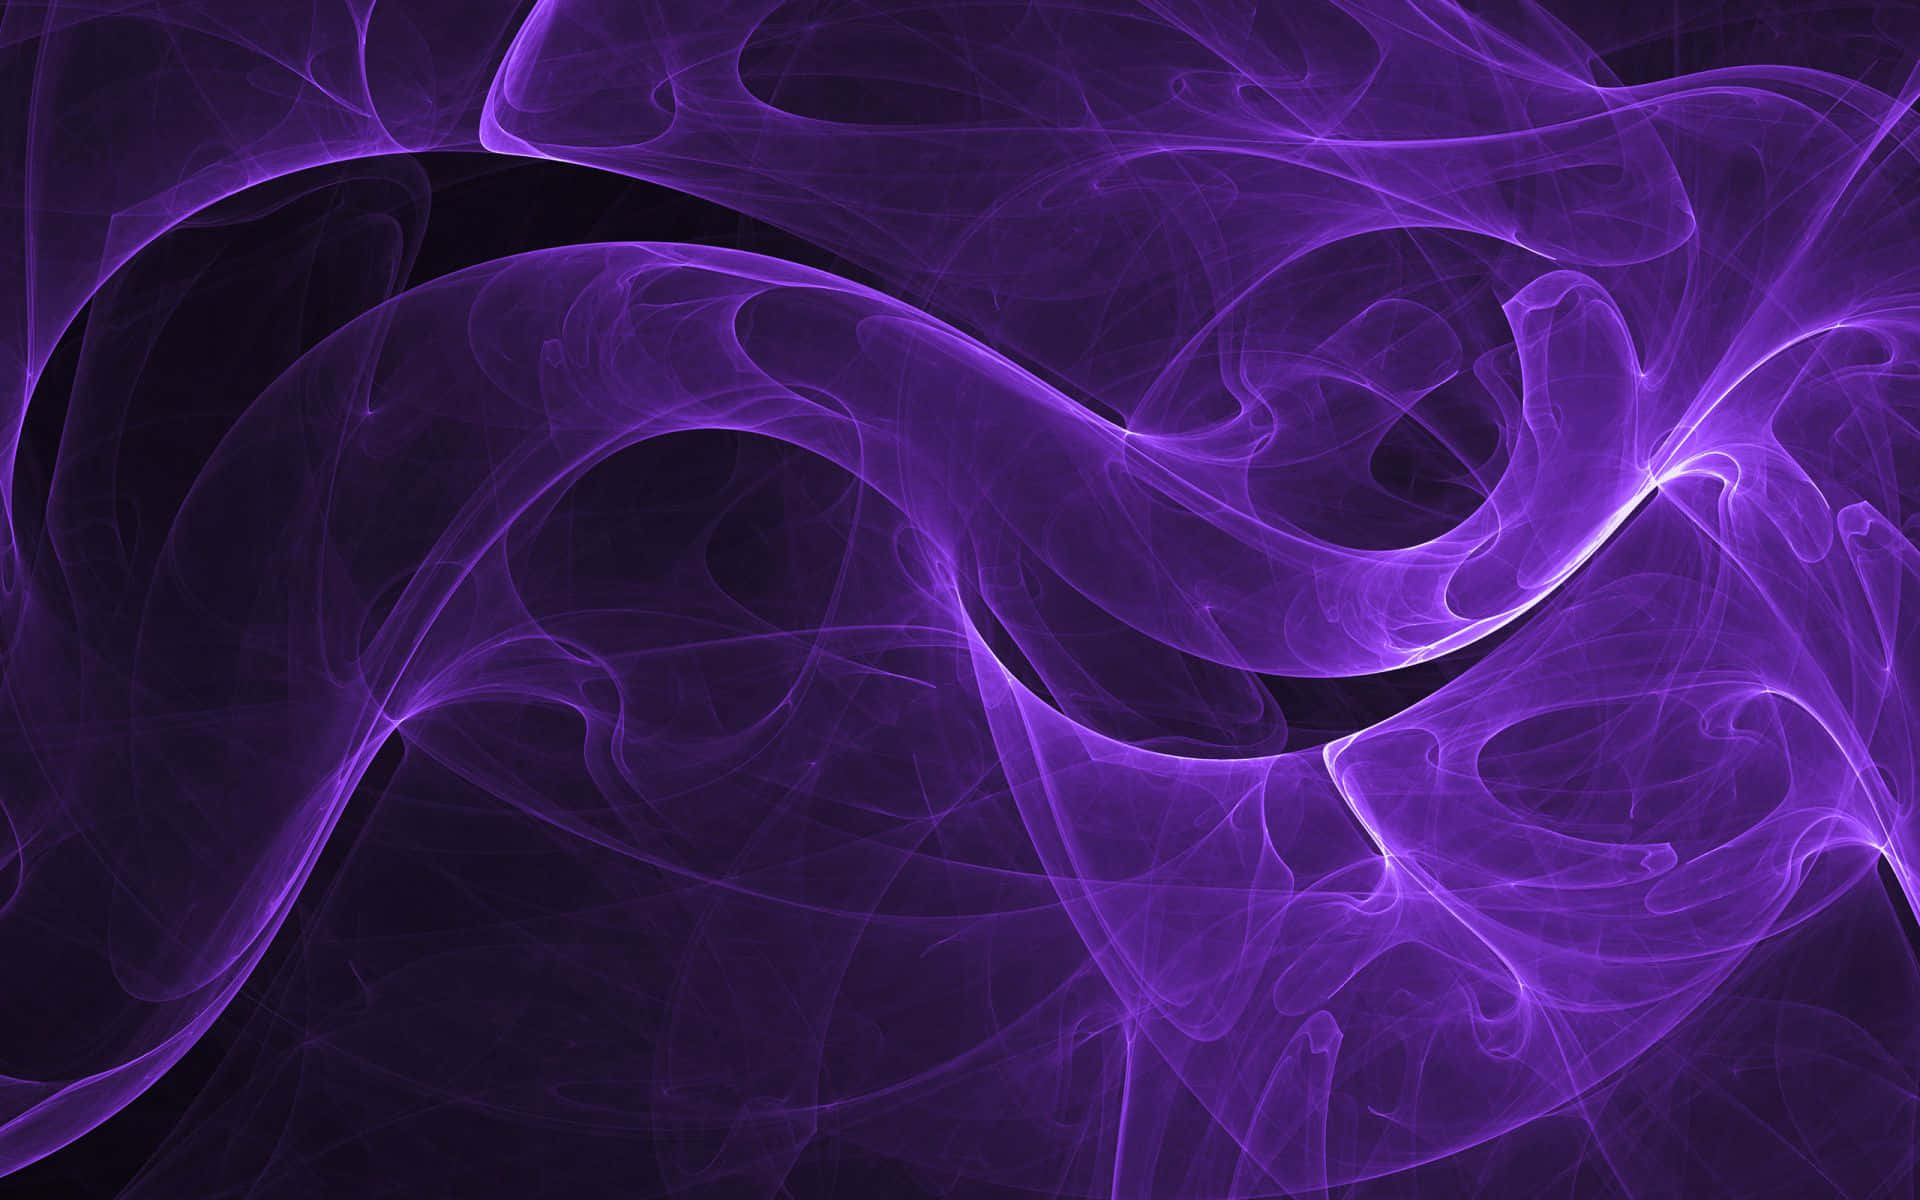 "Mysterious Purple Smoke"